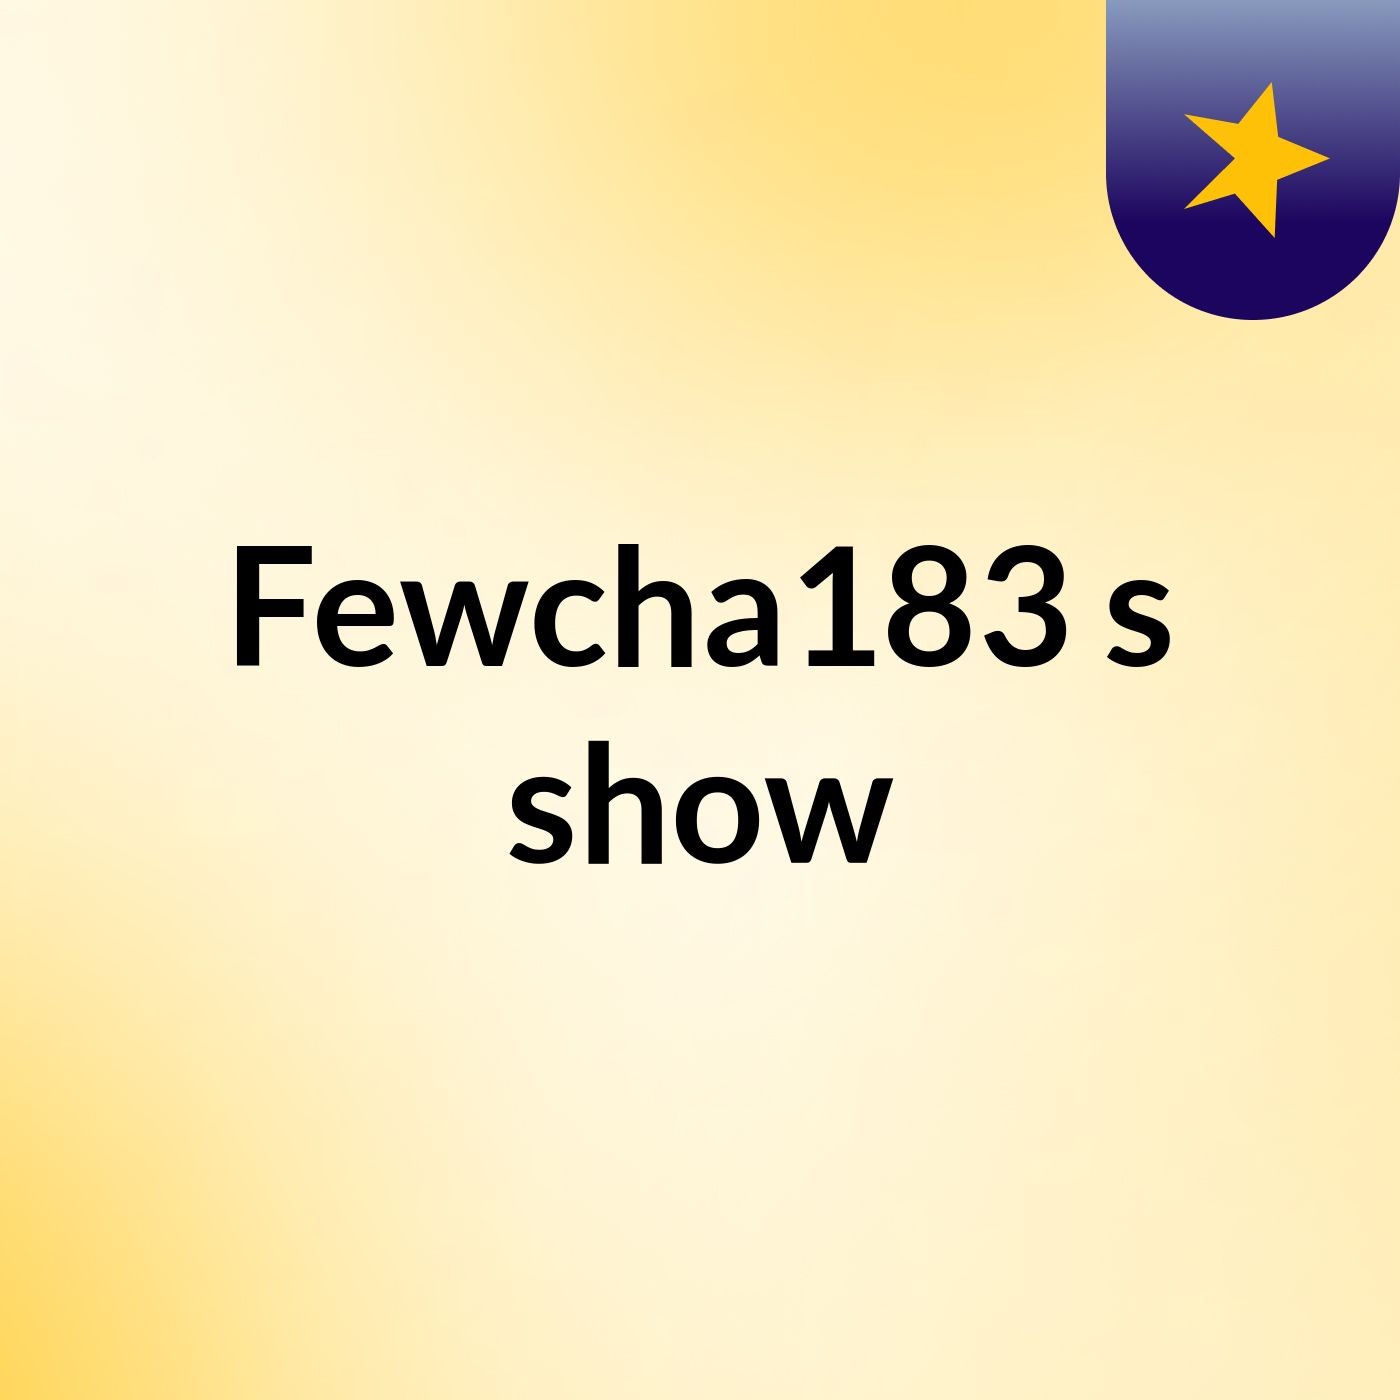 Fewcha183's show